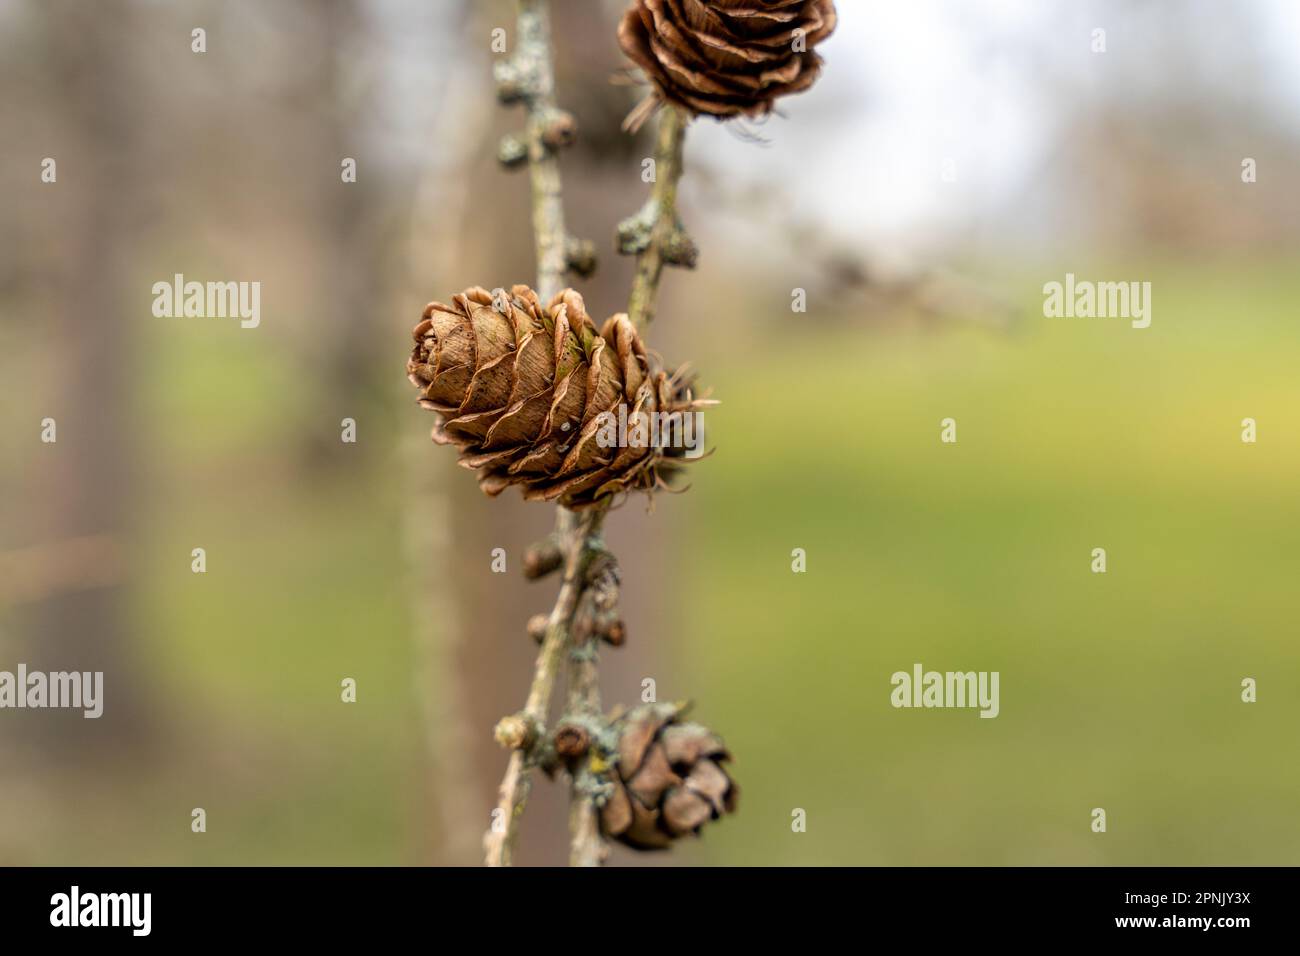 European Larch tree (Larix decidua) cones on a branch without needles Stock Photo